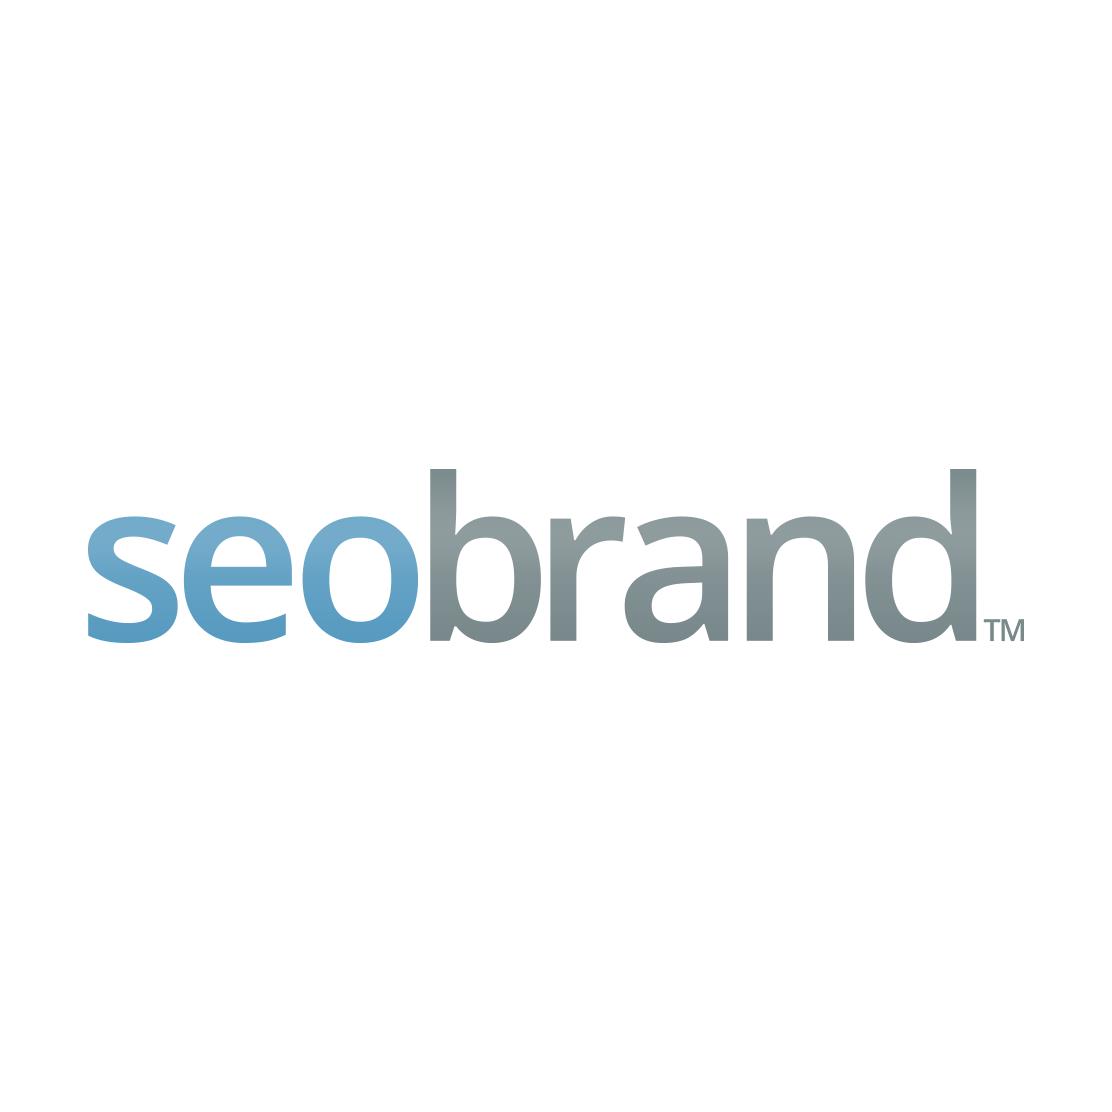 Best ORM Company Logo: SEO Brand